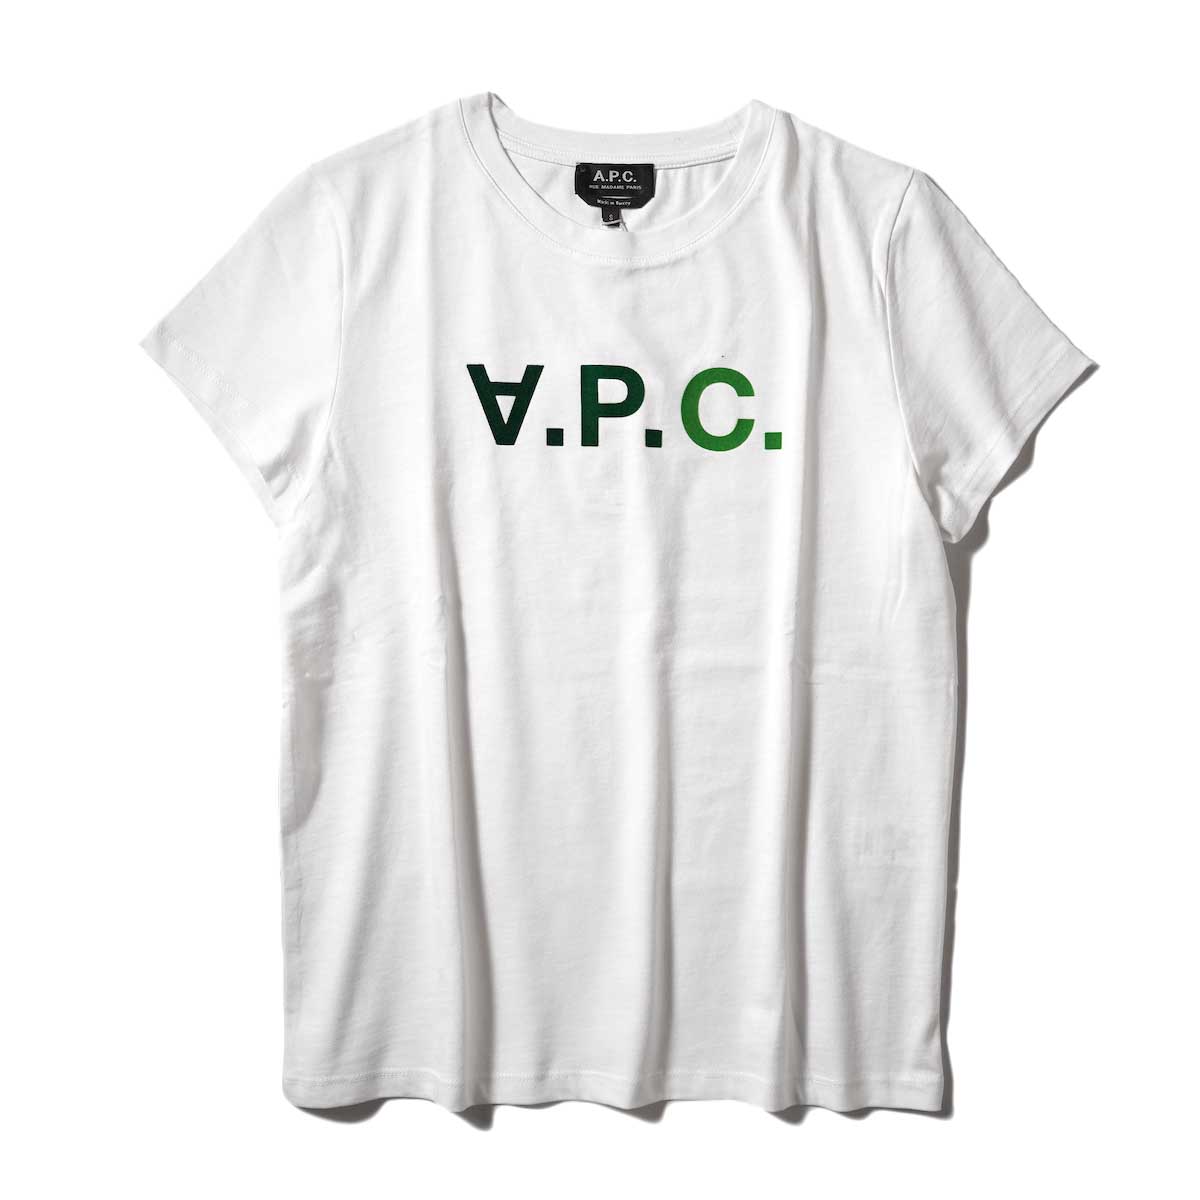 A.P.C. / VPC マルチカラーTシャツ (Vert)